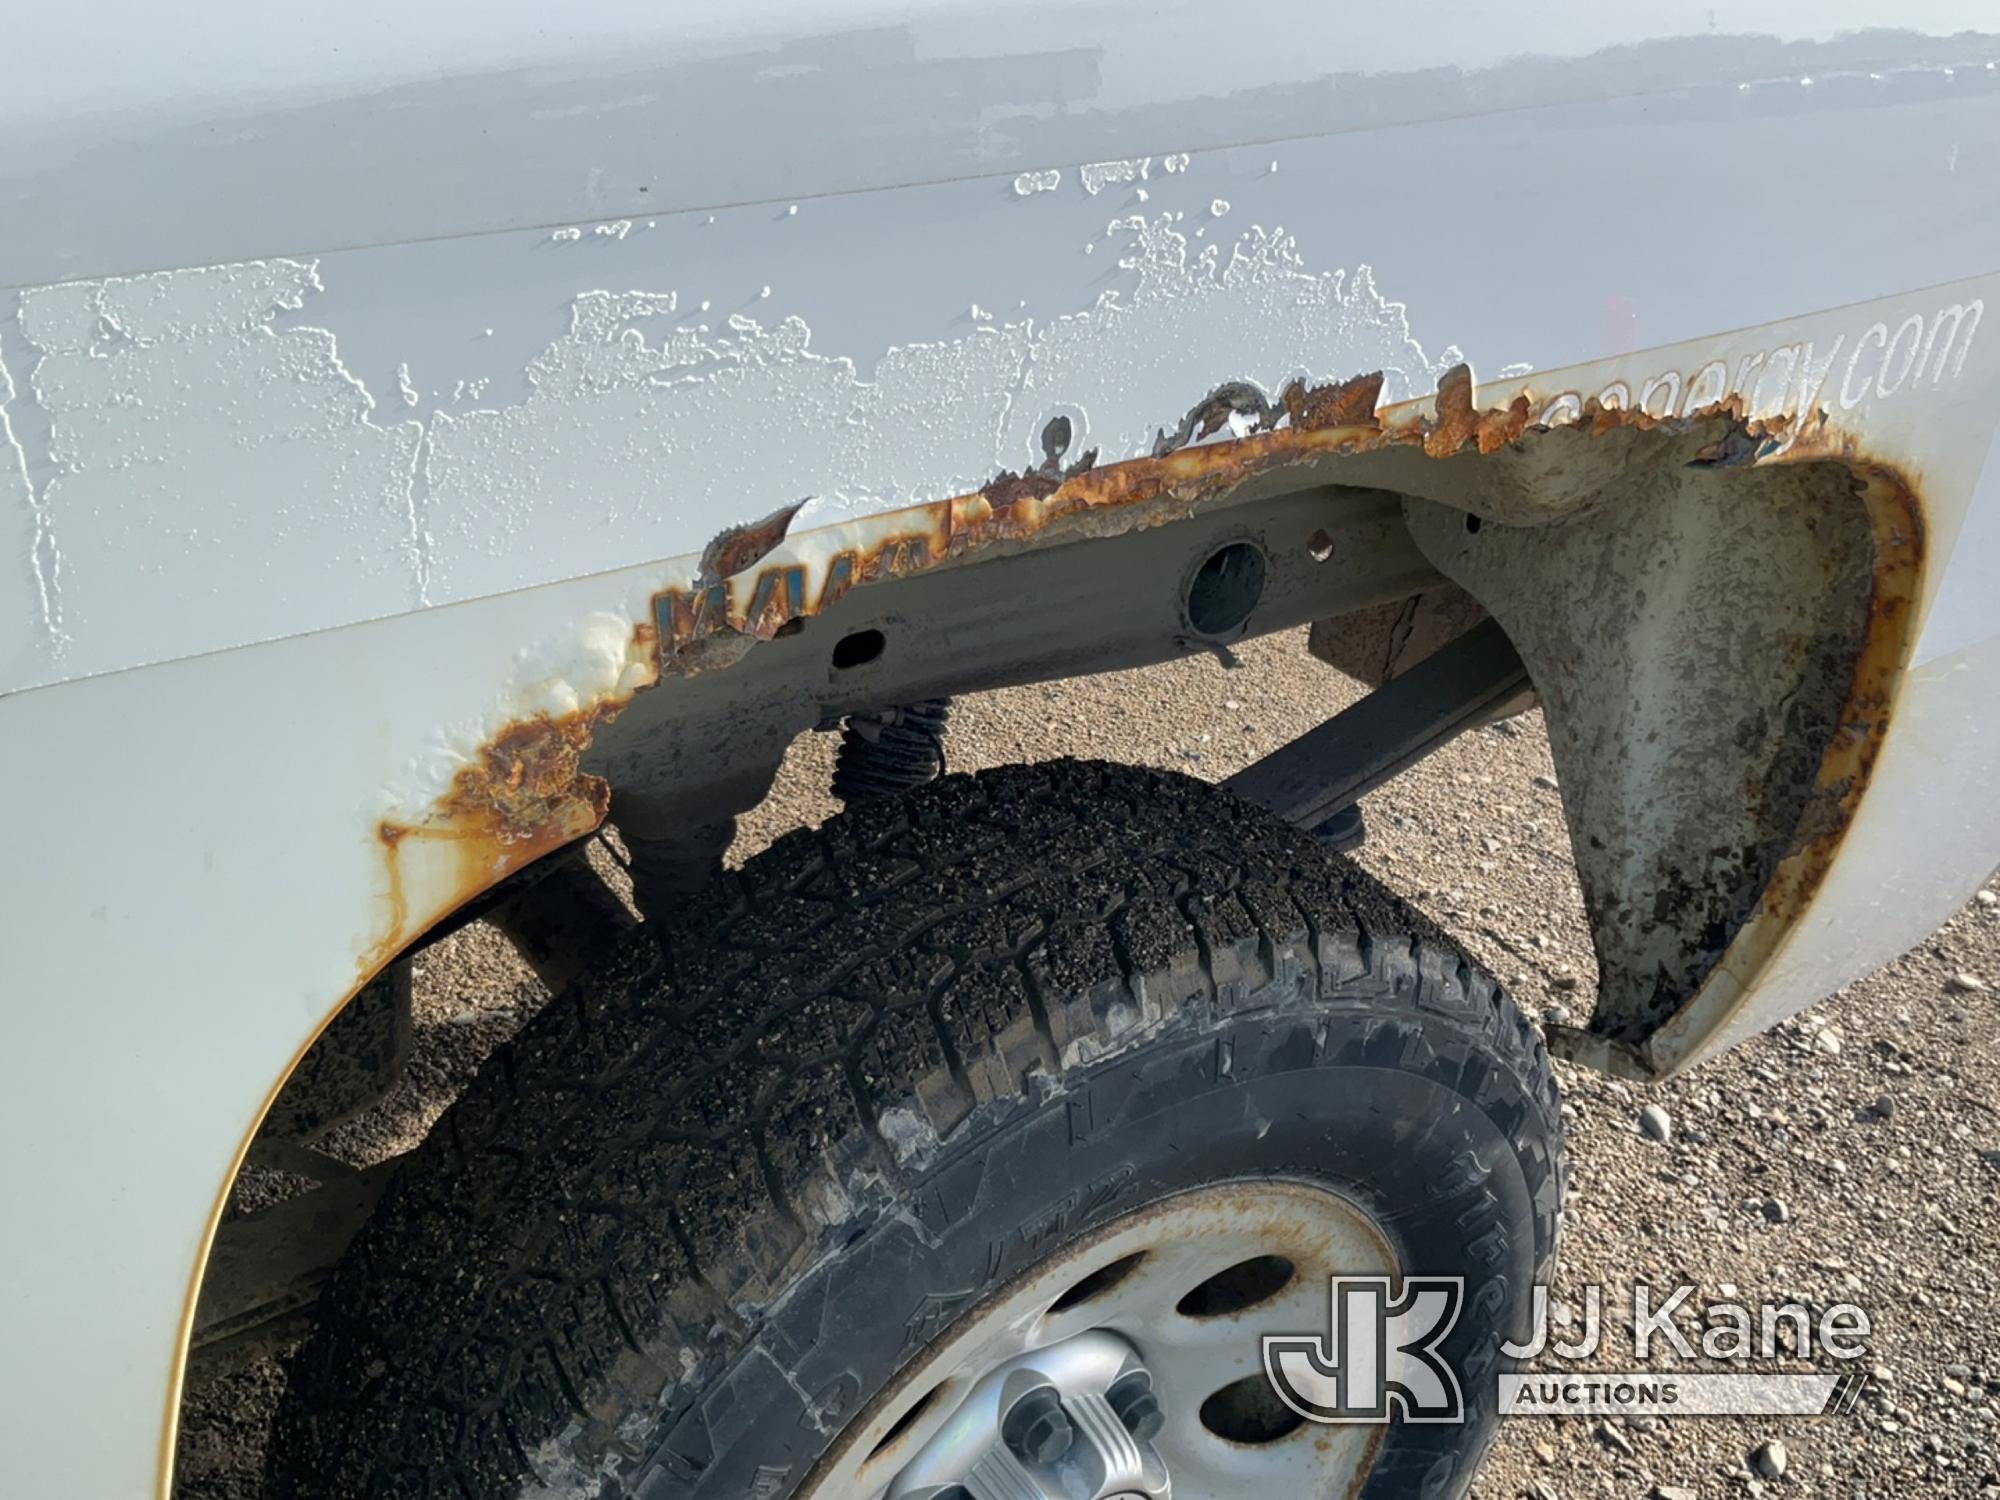 (Charlotte, MI) 2009 Chevrolet Silverado 1500 Pickup Truck Runs & Moves) (Rust Damage, Body Damage